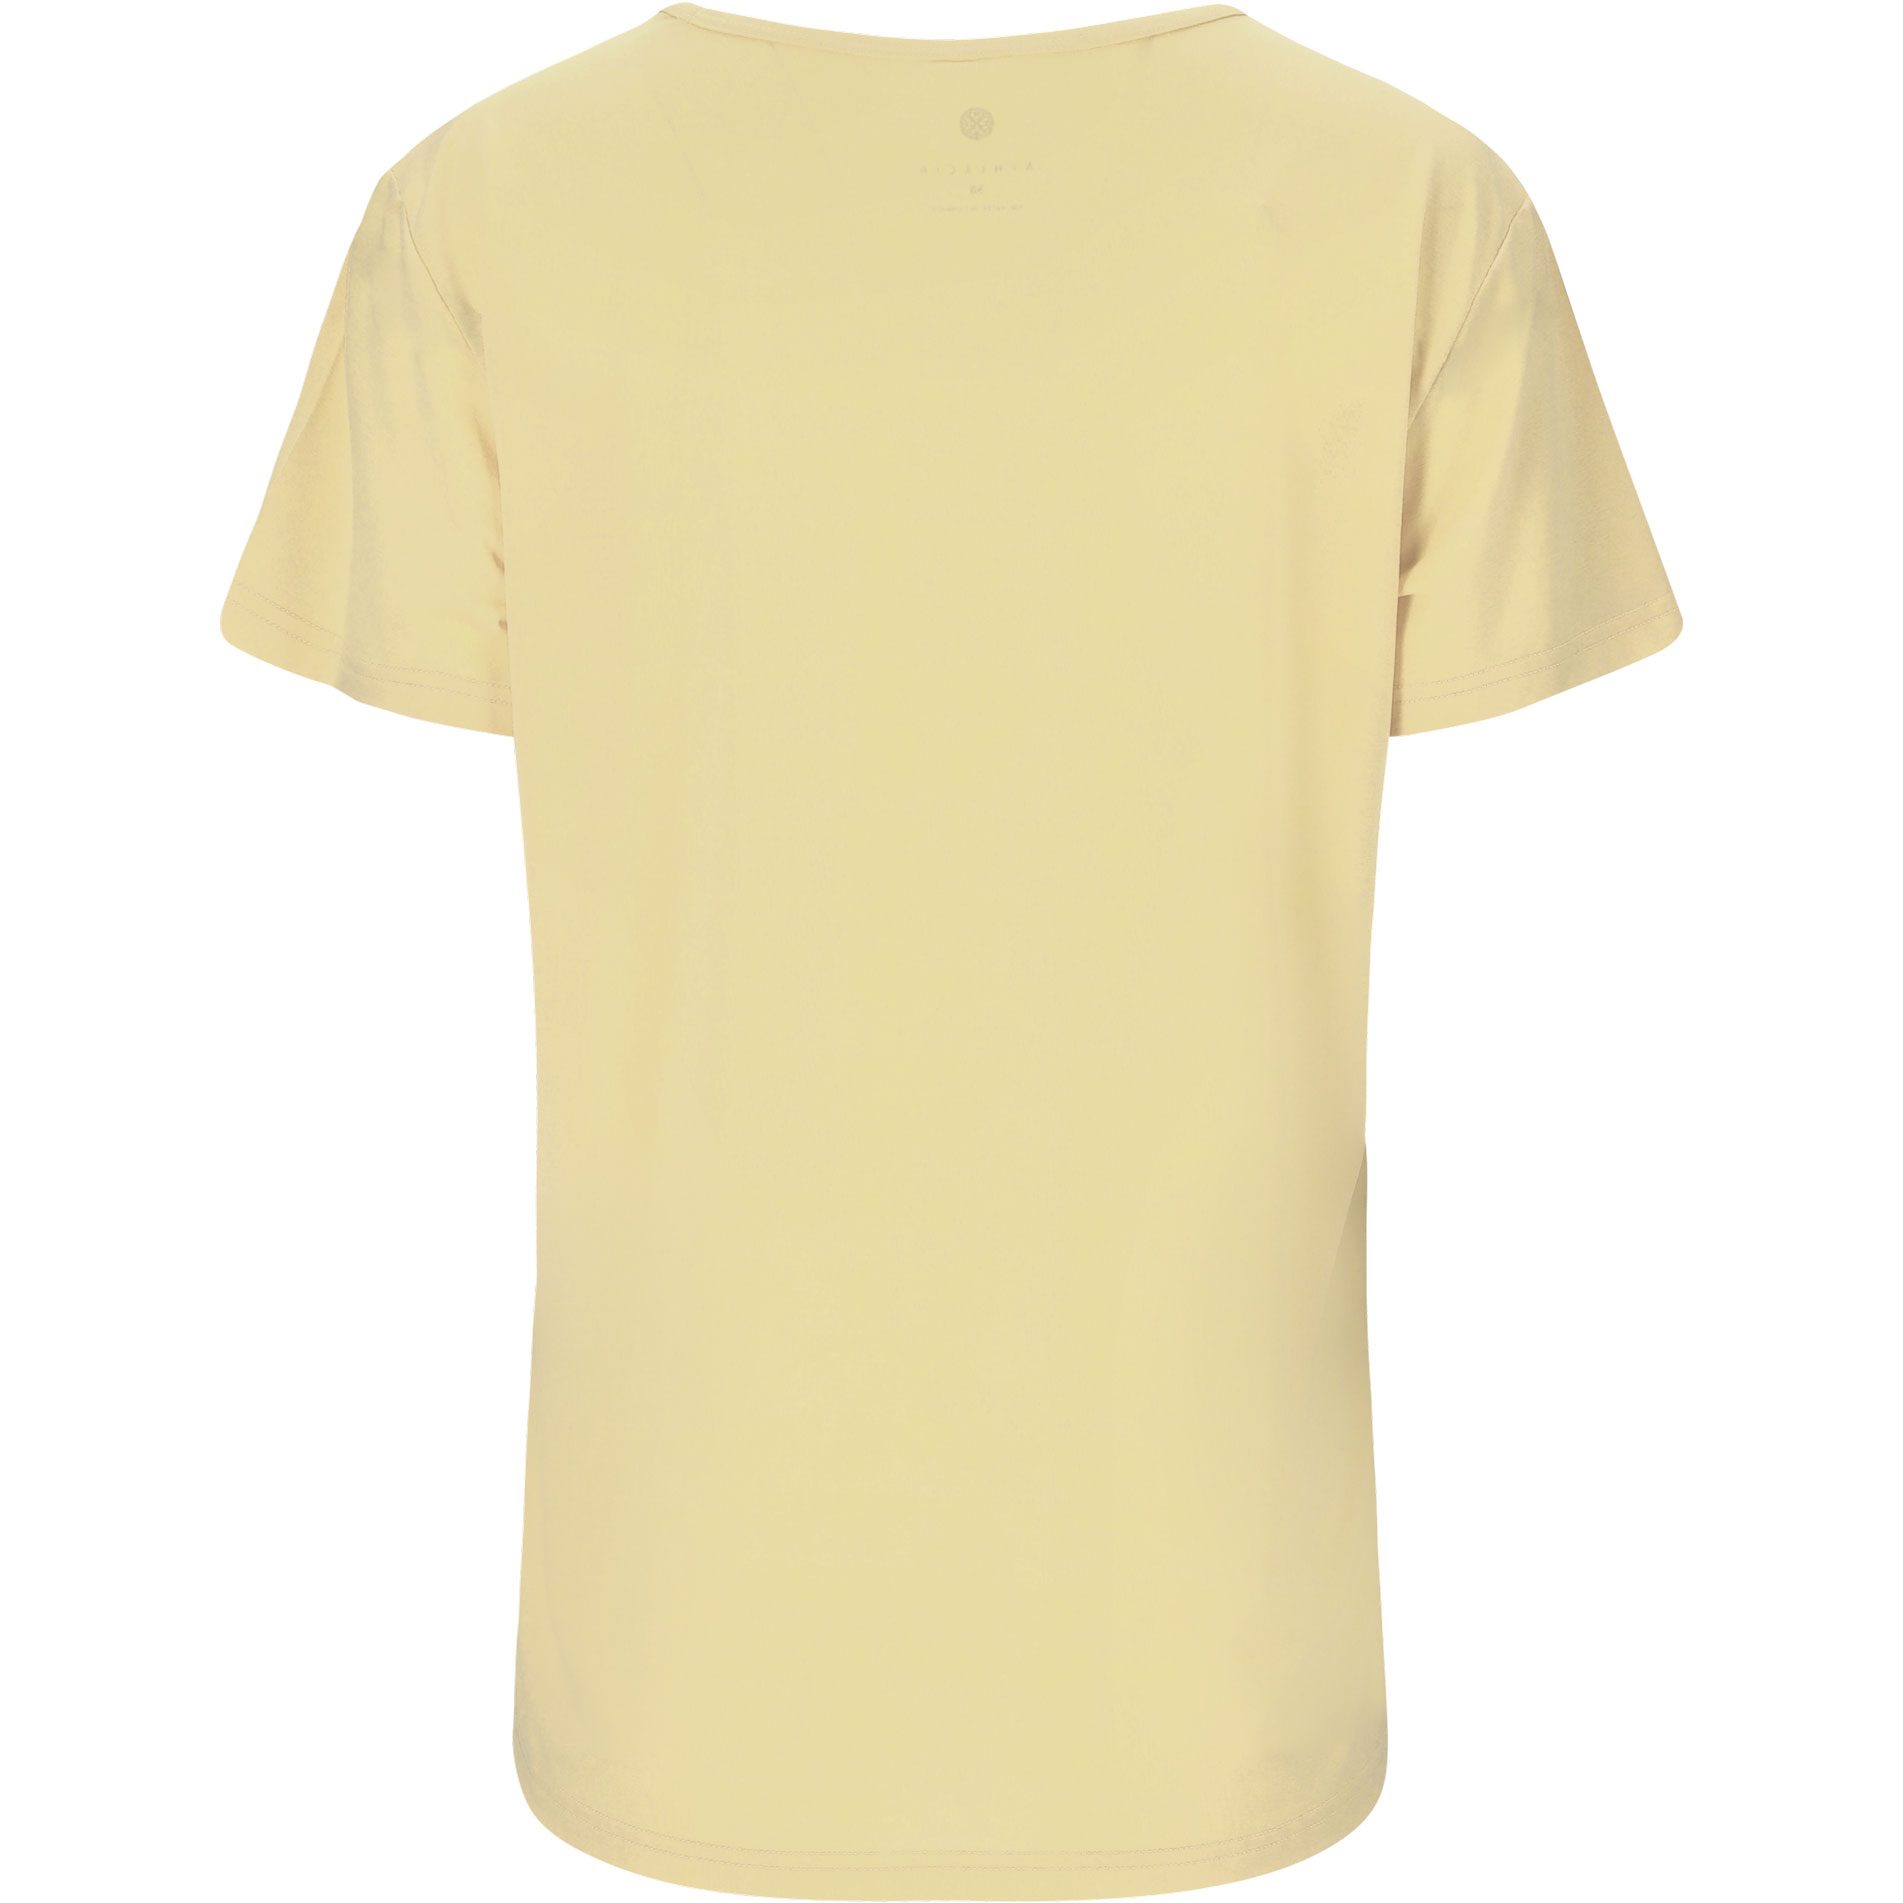 Athlecia - Lizzy W Slub T-Shirt Damen lemon icing kaufen im Sport Bittl Shop | T-Shirts